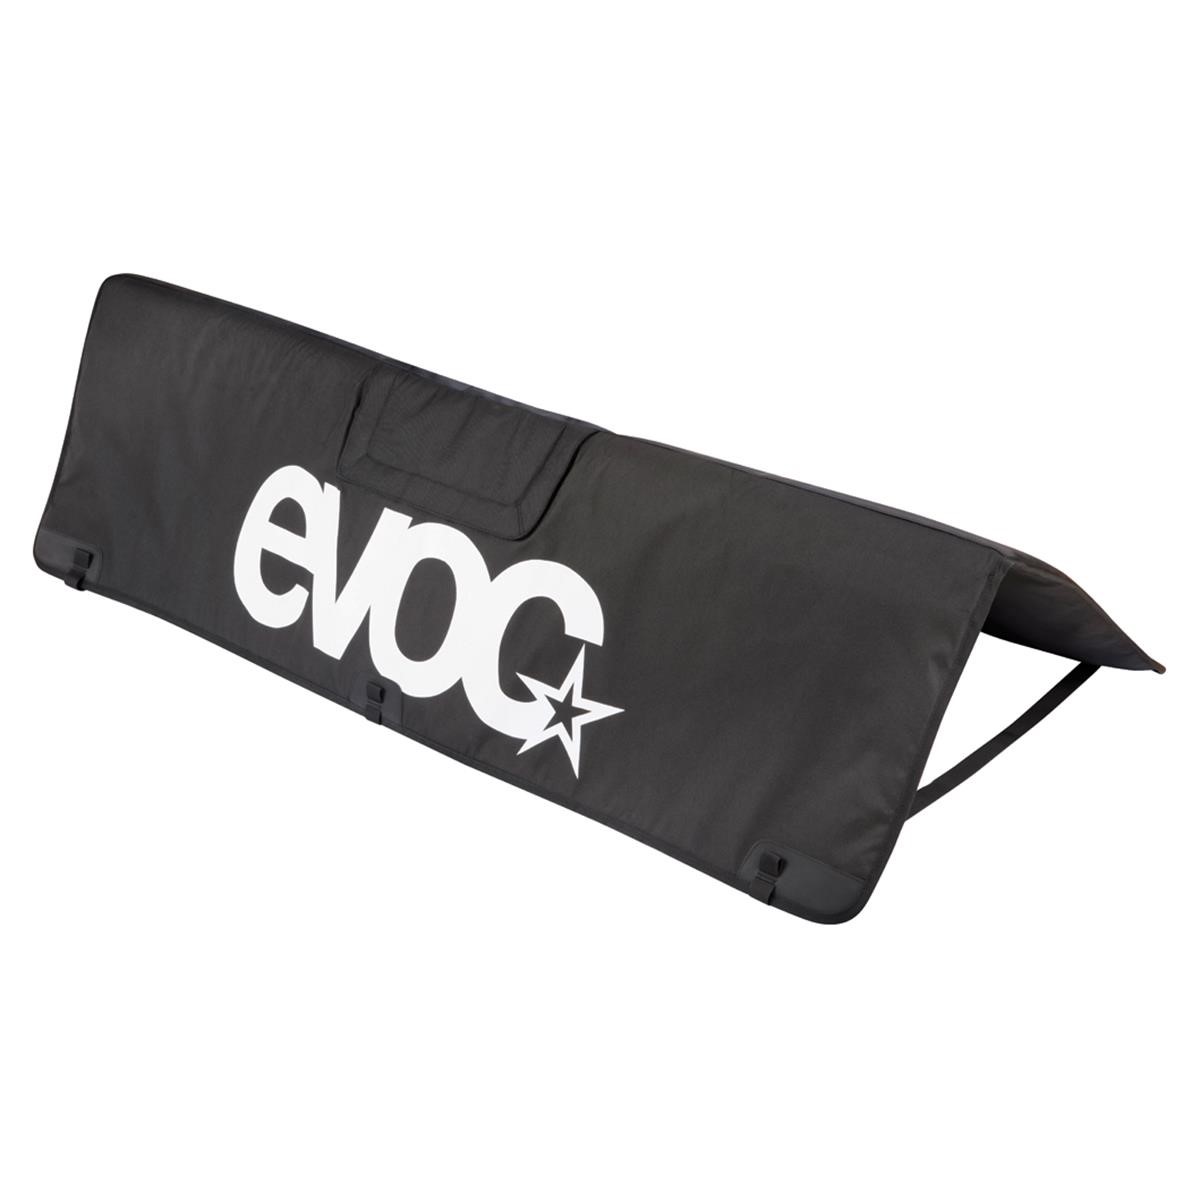 Evoc Tailgate Protection Pick Up Pad Black, XL